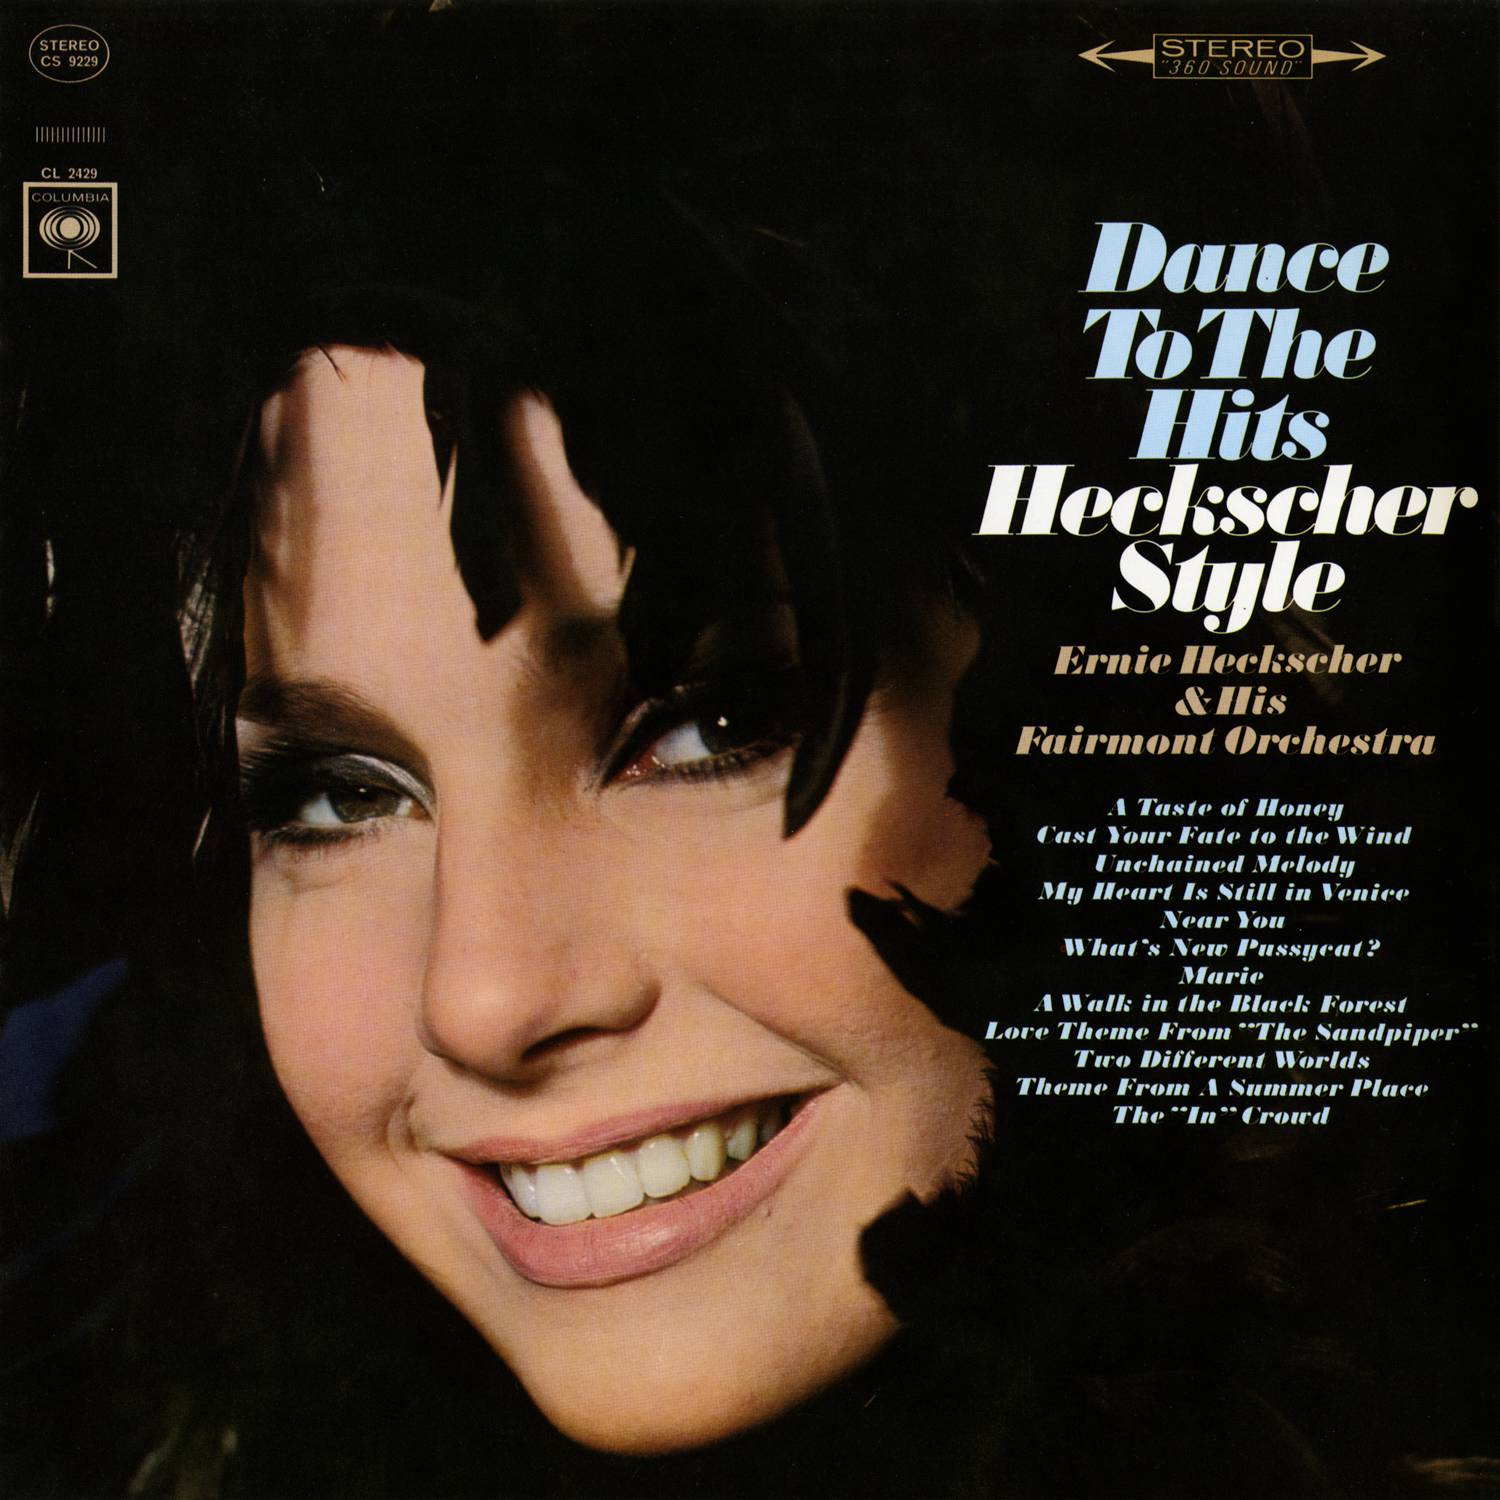 Ernie Heckscher & His Fairmont Orchestra - Dance To The Hits Heckscher Style (1967/2015) [AcousticSounds FLAC 24bit/96kHz]